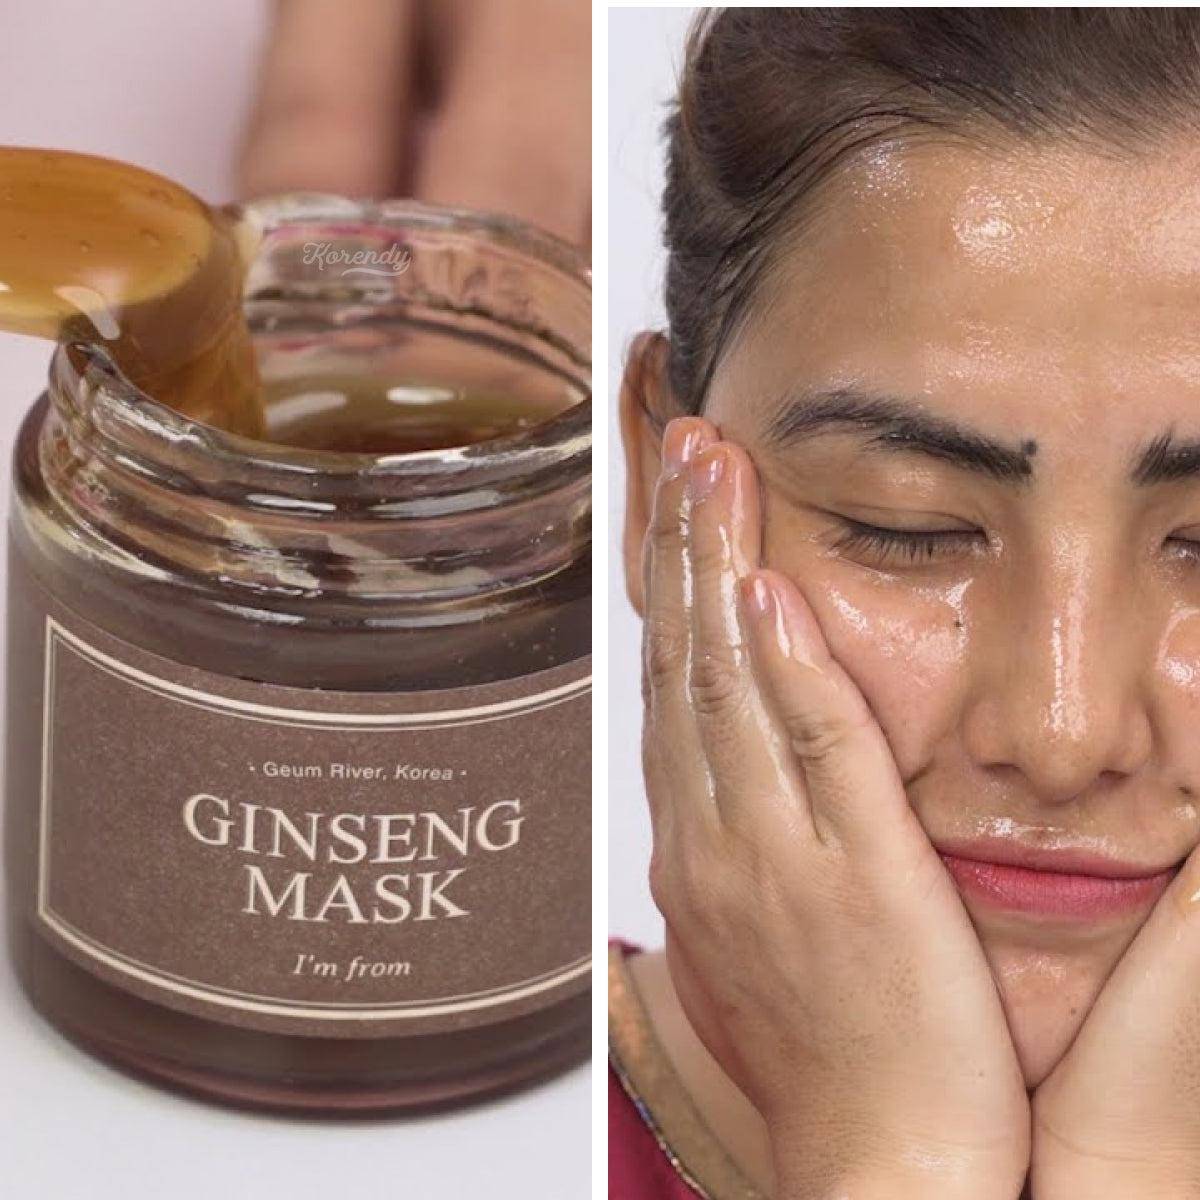 I'm From - Ginseng Mask 120gr Maske (Sürülebilir) Korendy Türkiye Turkey Kore Kozmetik Kbeauty Cilt Bakım 